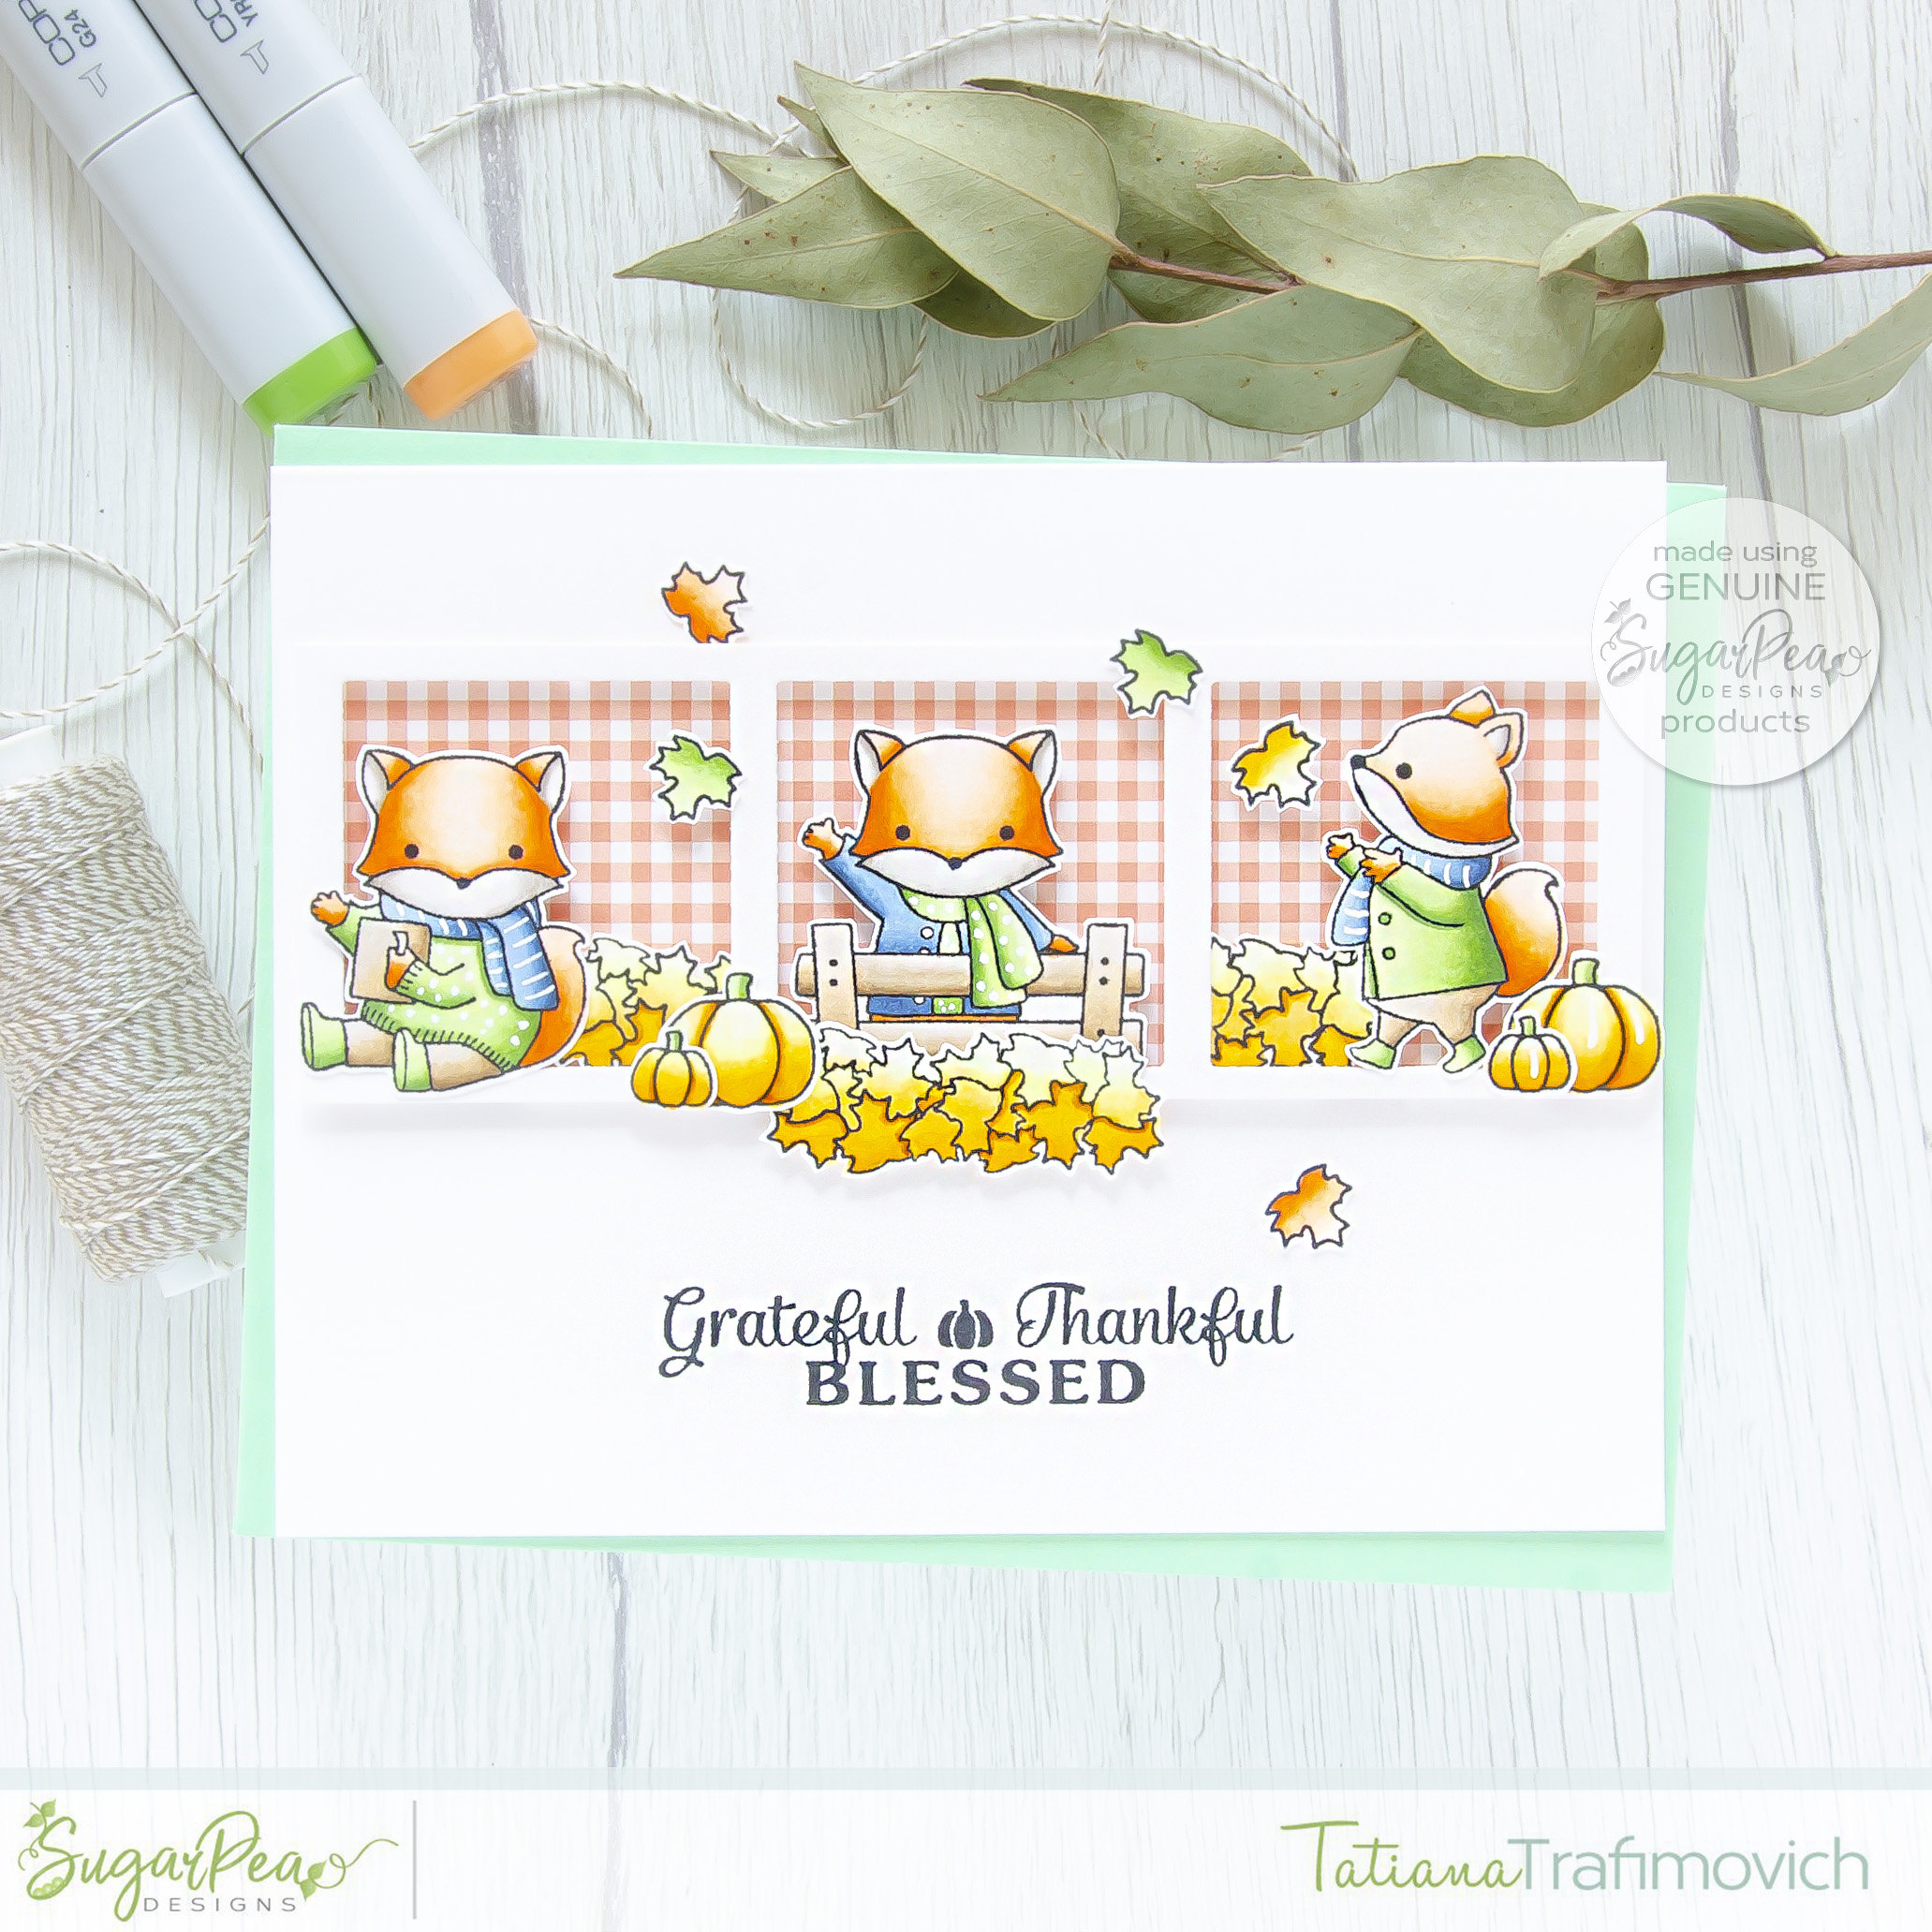 Grateful Thankful Blessed #handmade card by Tatiana Trafimovich #tatianacraftandart - Fall Fox stamp set by SugarPea Designs #sugarpeadesigns